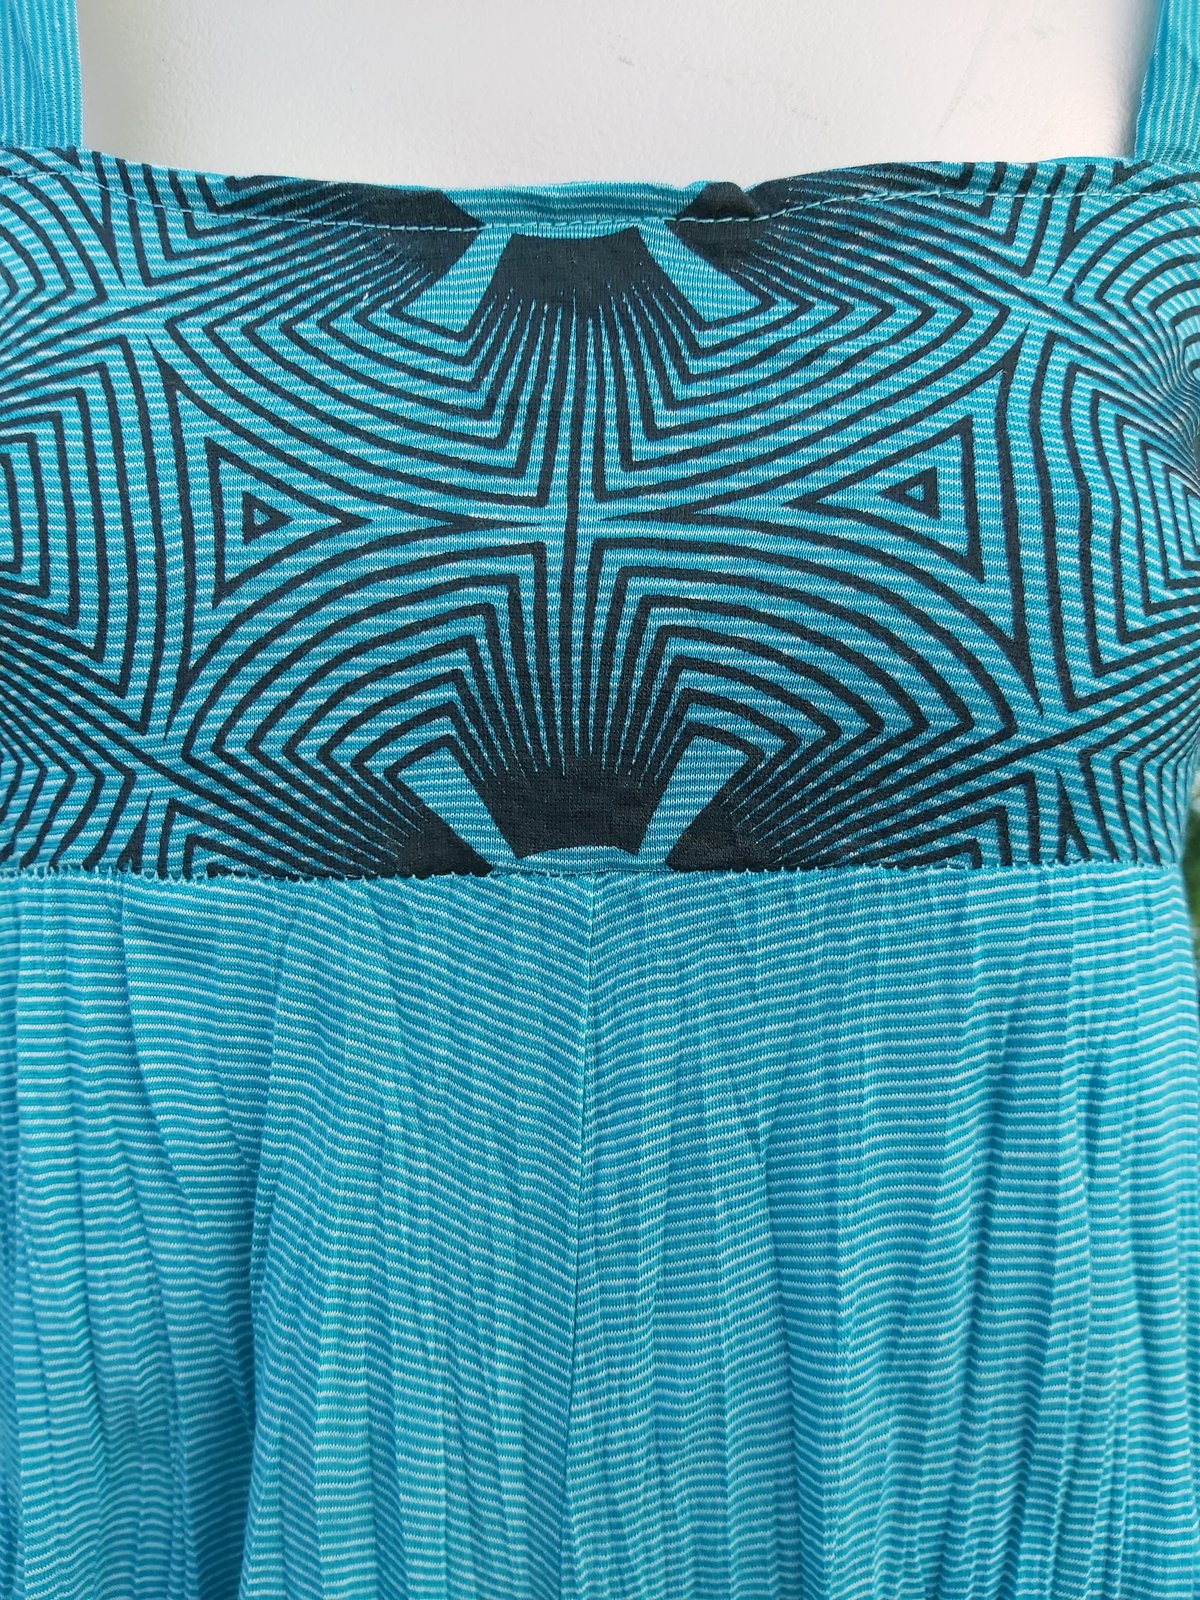 Image of Blue Summer dress size 8-12 